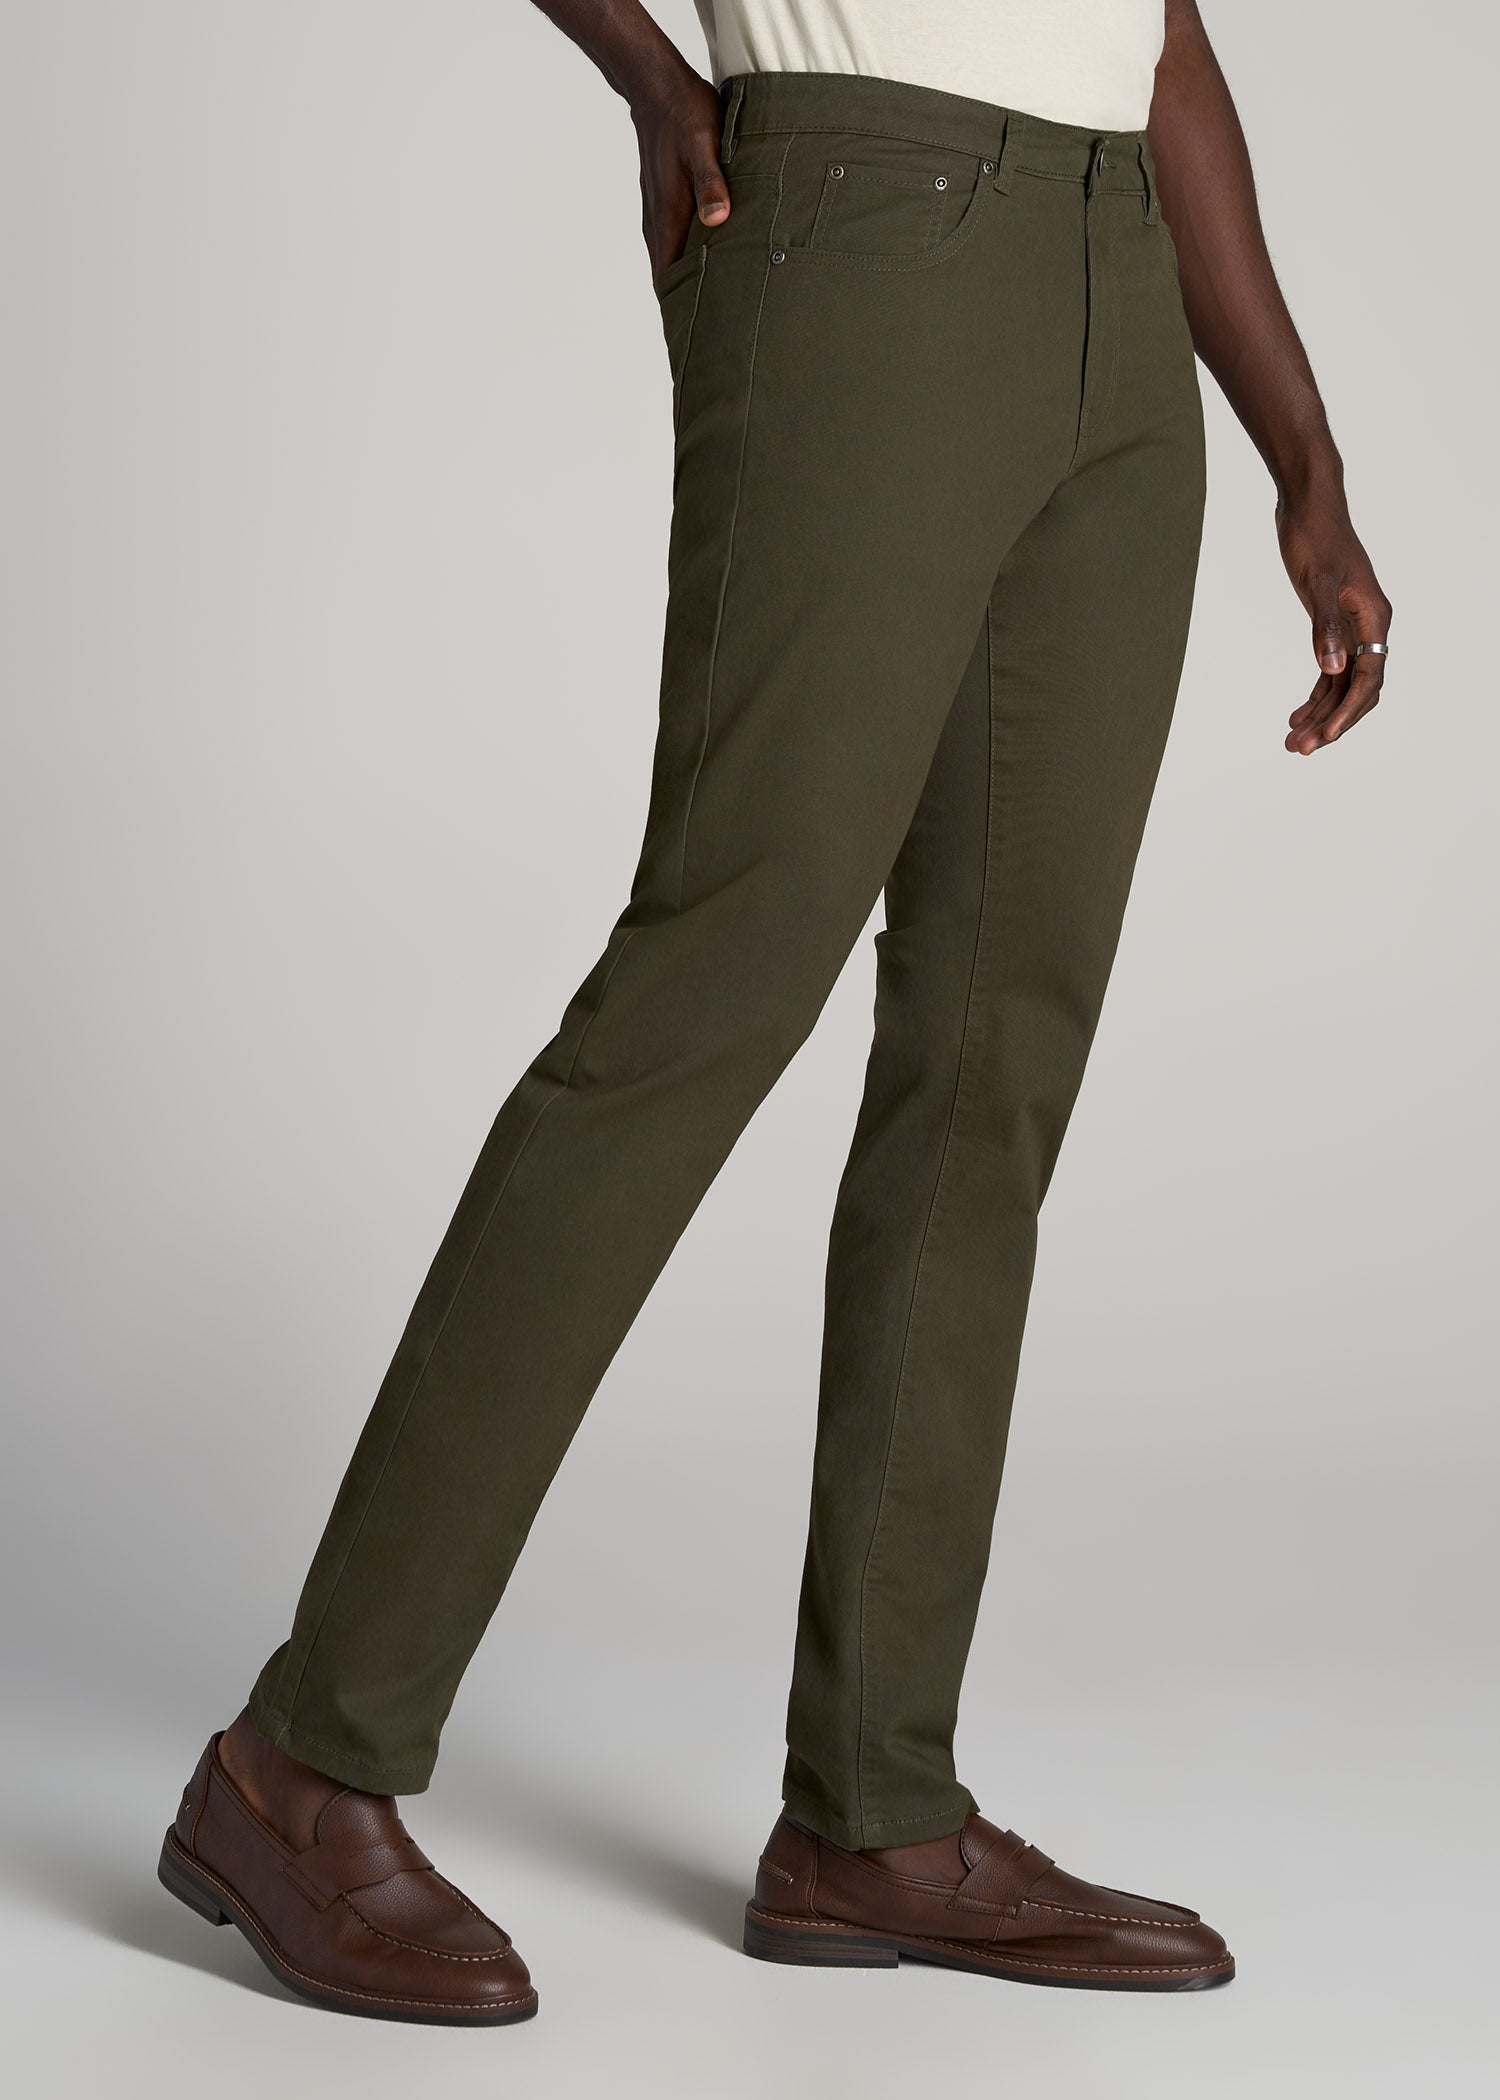 Banana Republic Mens 5-Pocket Slim Fit Stretch Comfort Pant Gray Color